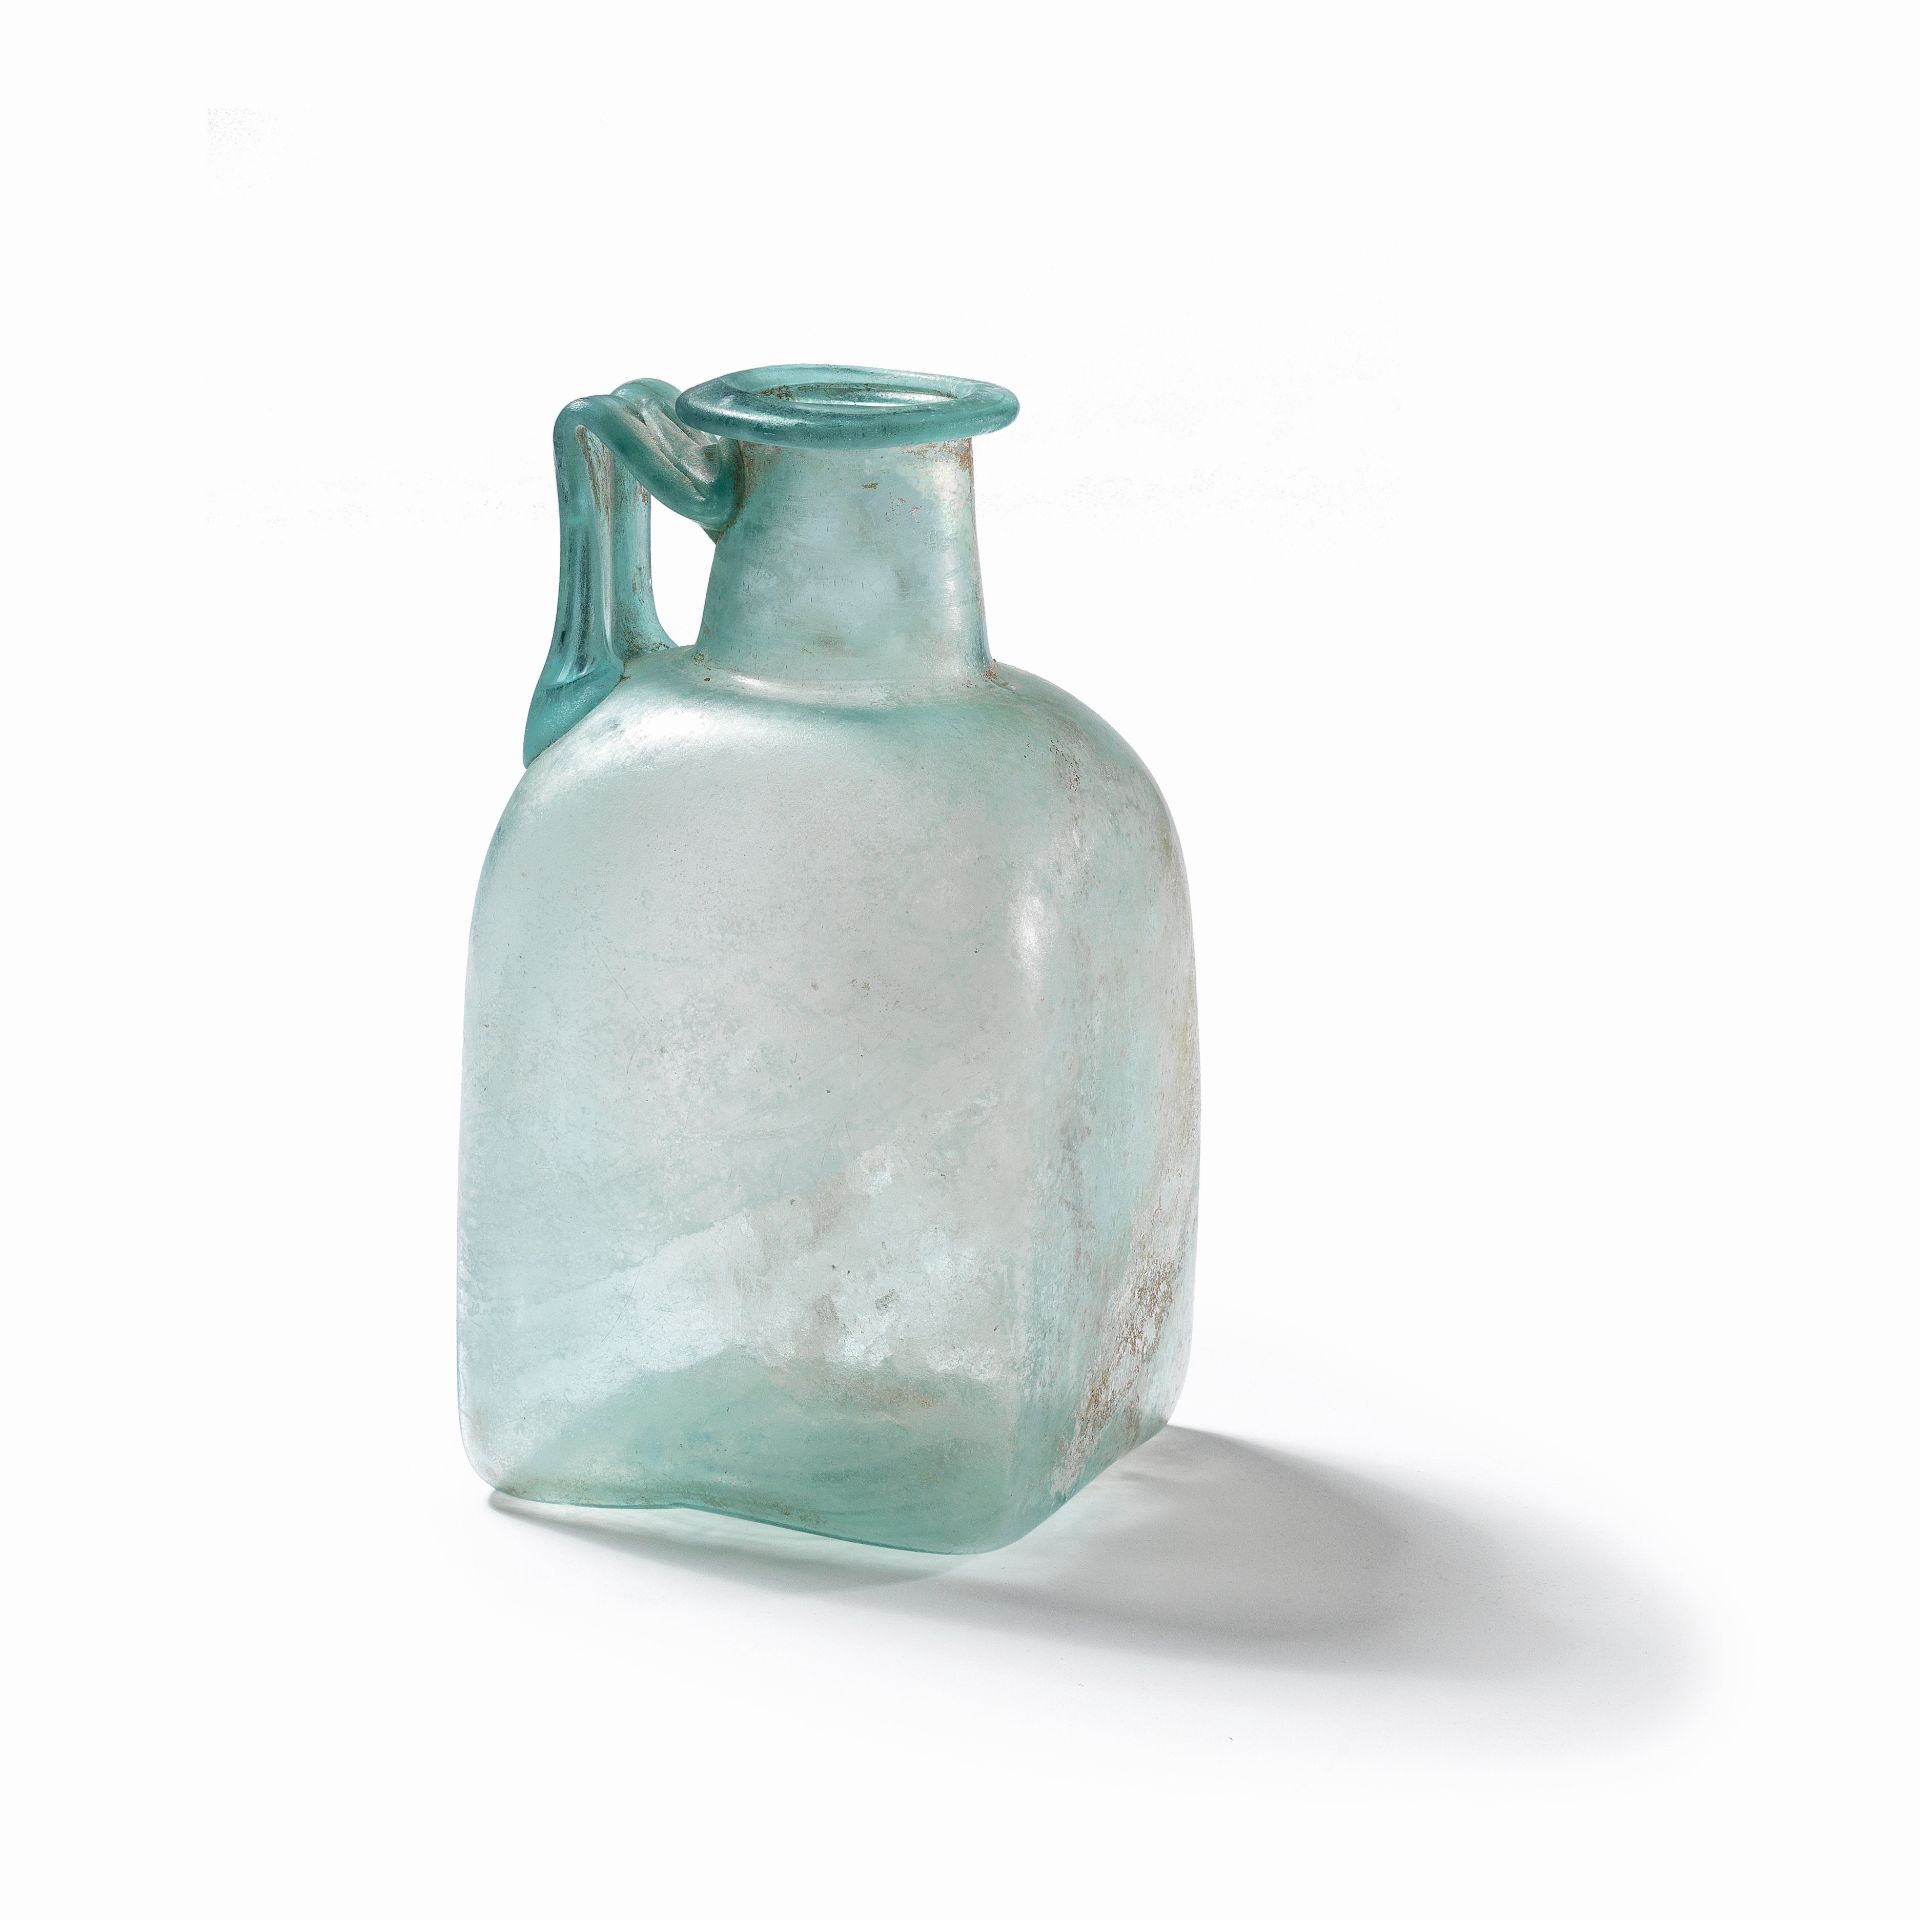 A Roman pale blue square glass jug